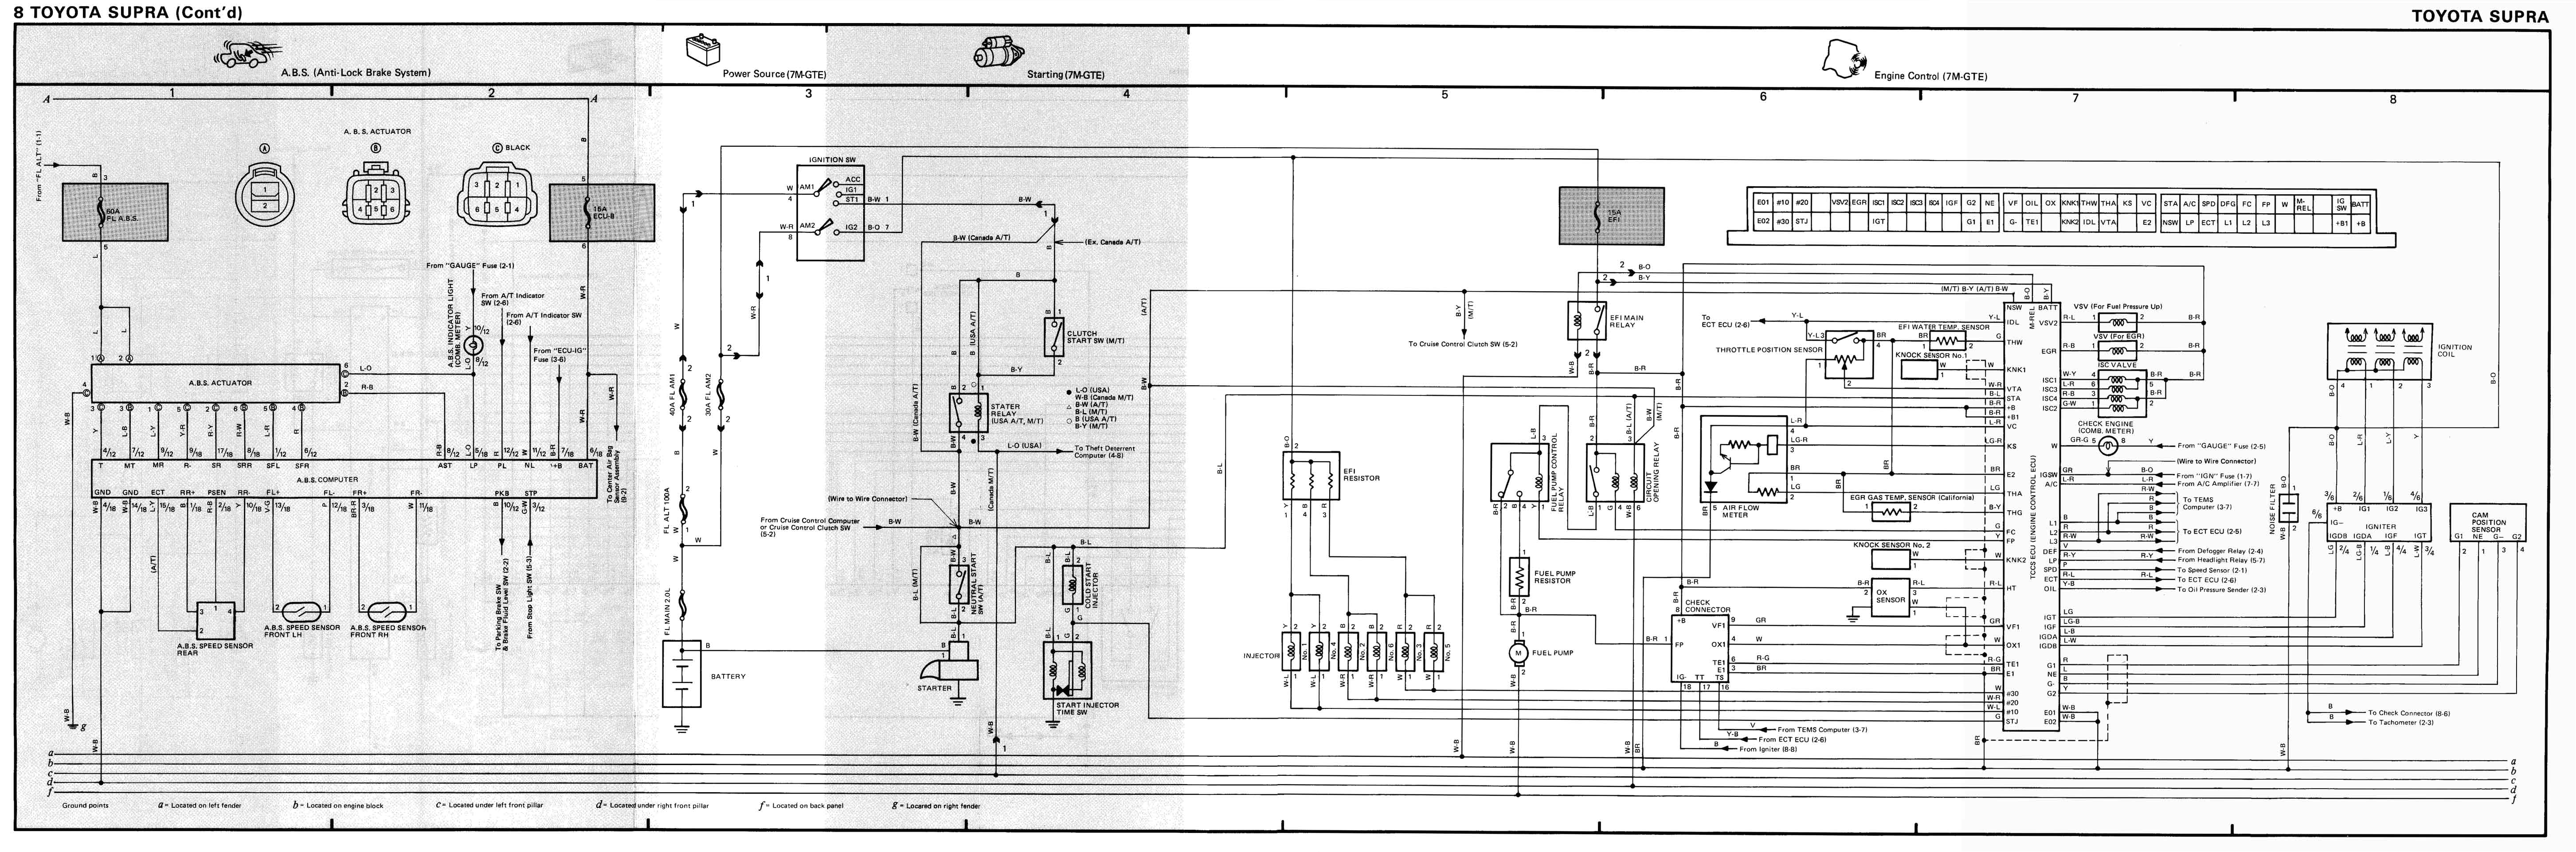 7mgte wiring diagram data diagram schematic 87 toyota supra wiring harness diagram